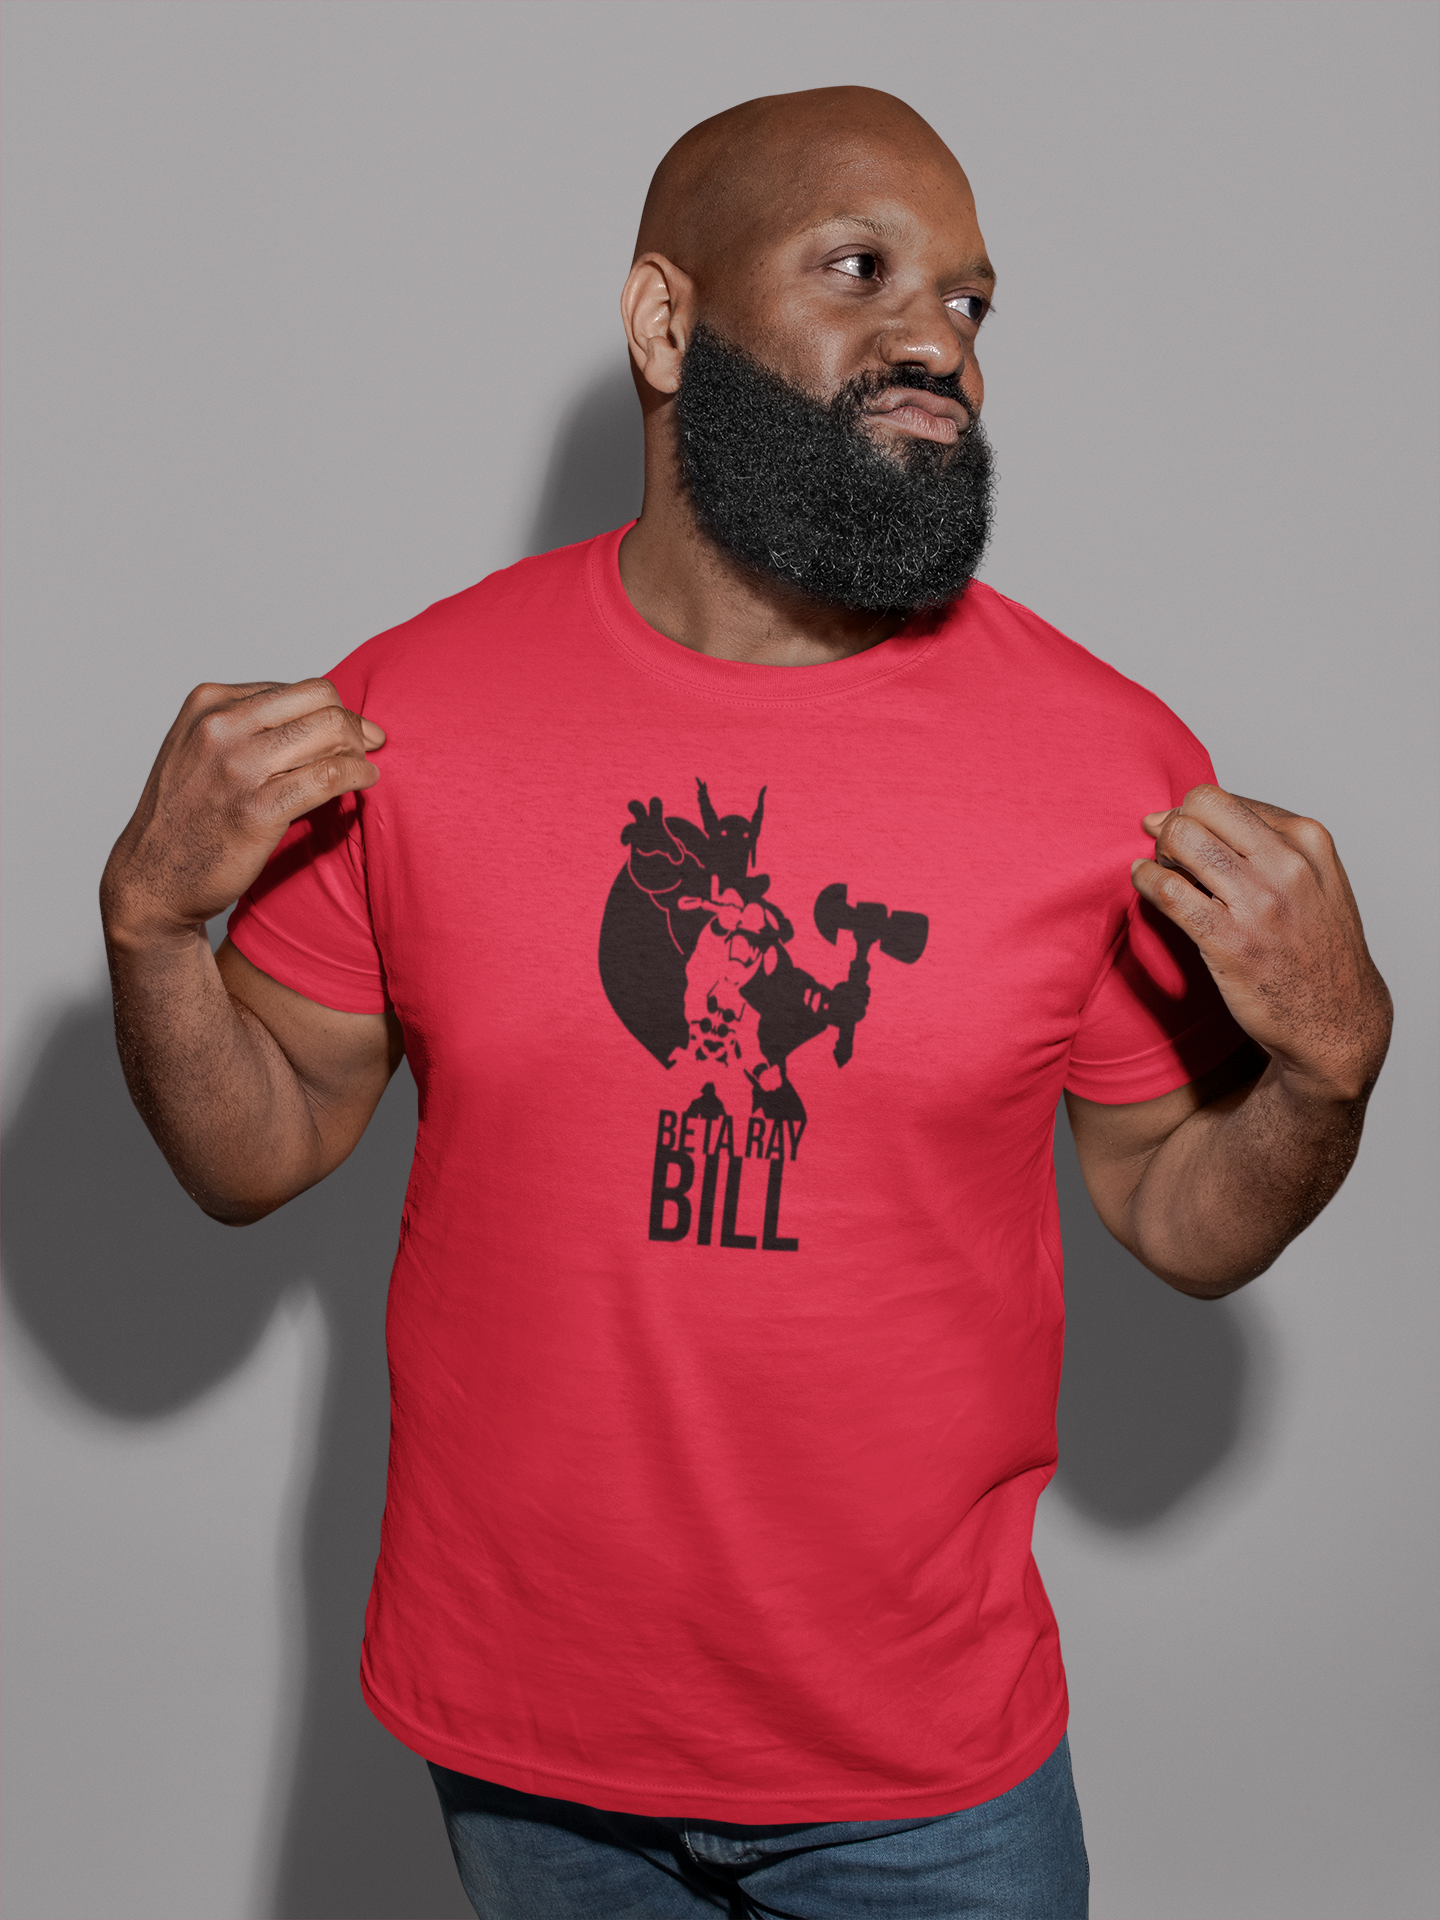 beta ray bill shirt